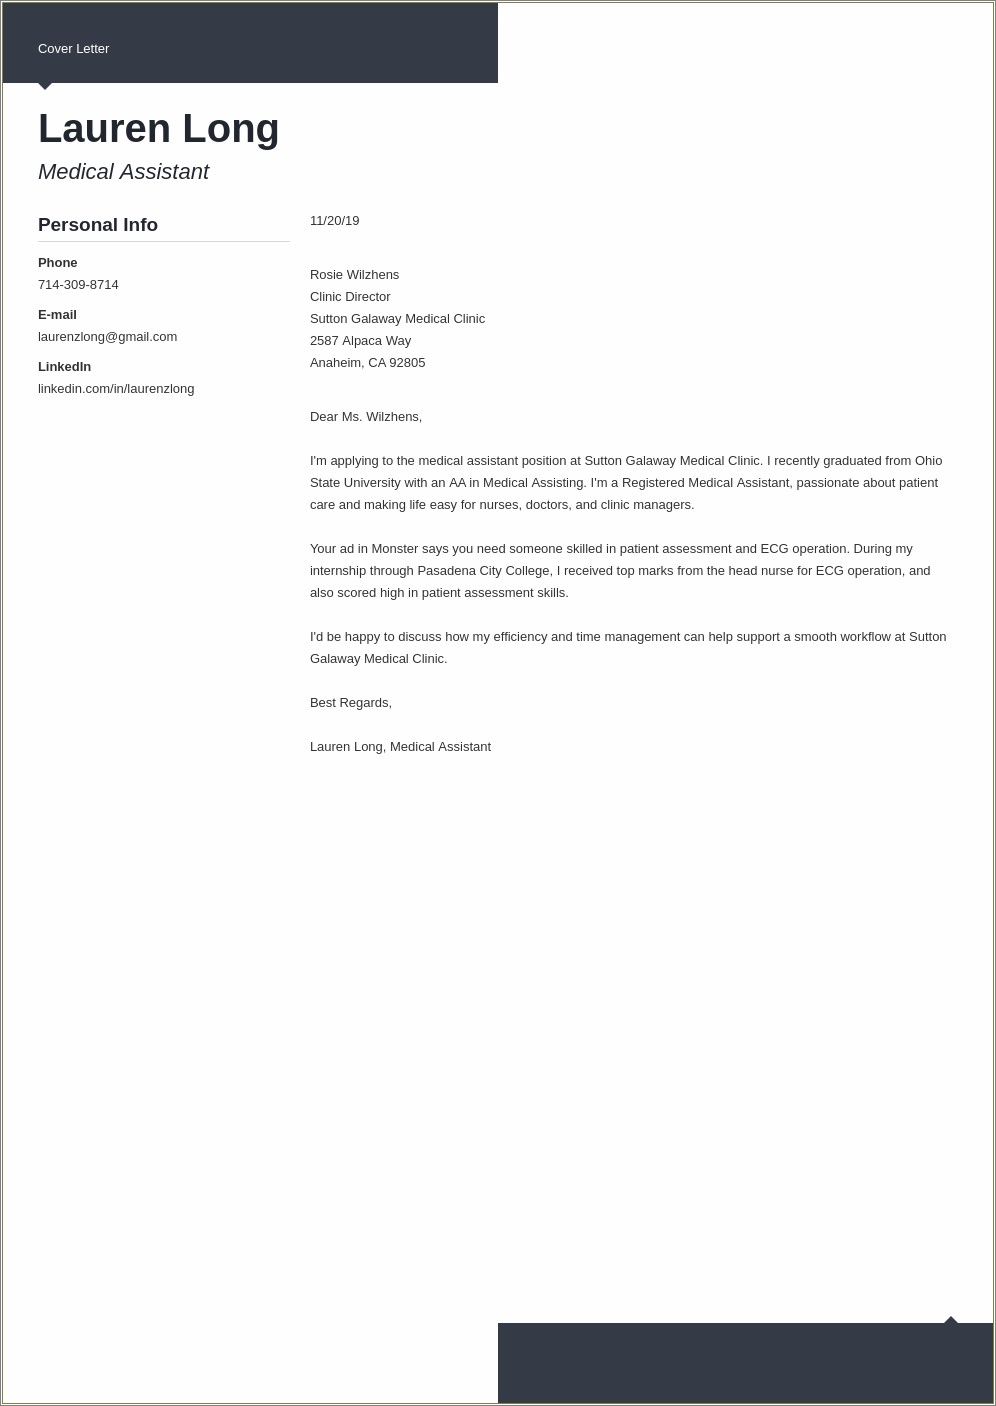 Medical Assistant Job Cover Letter For Resume